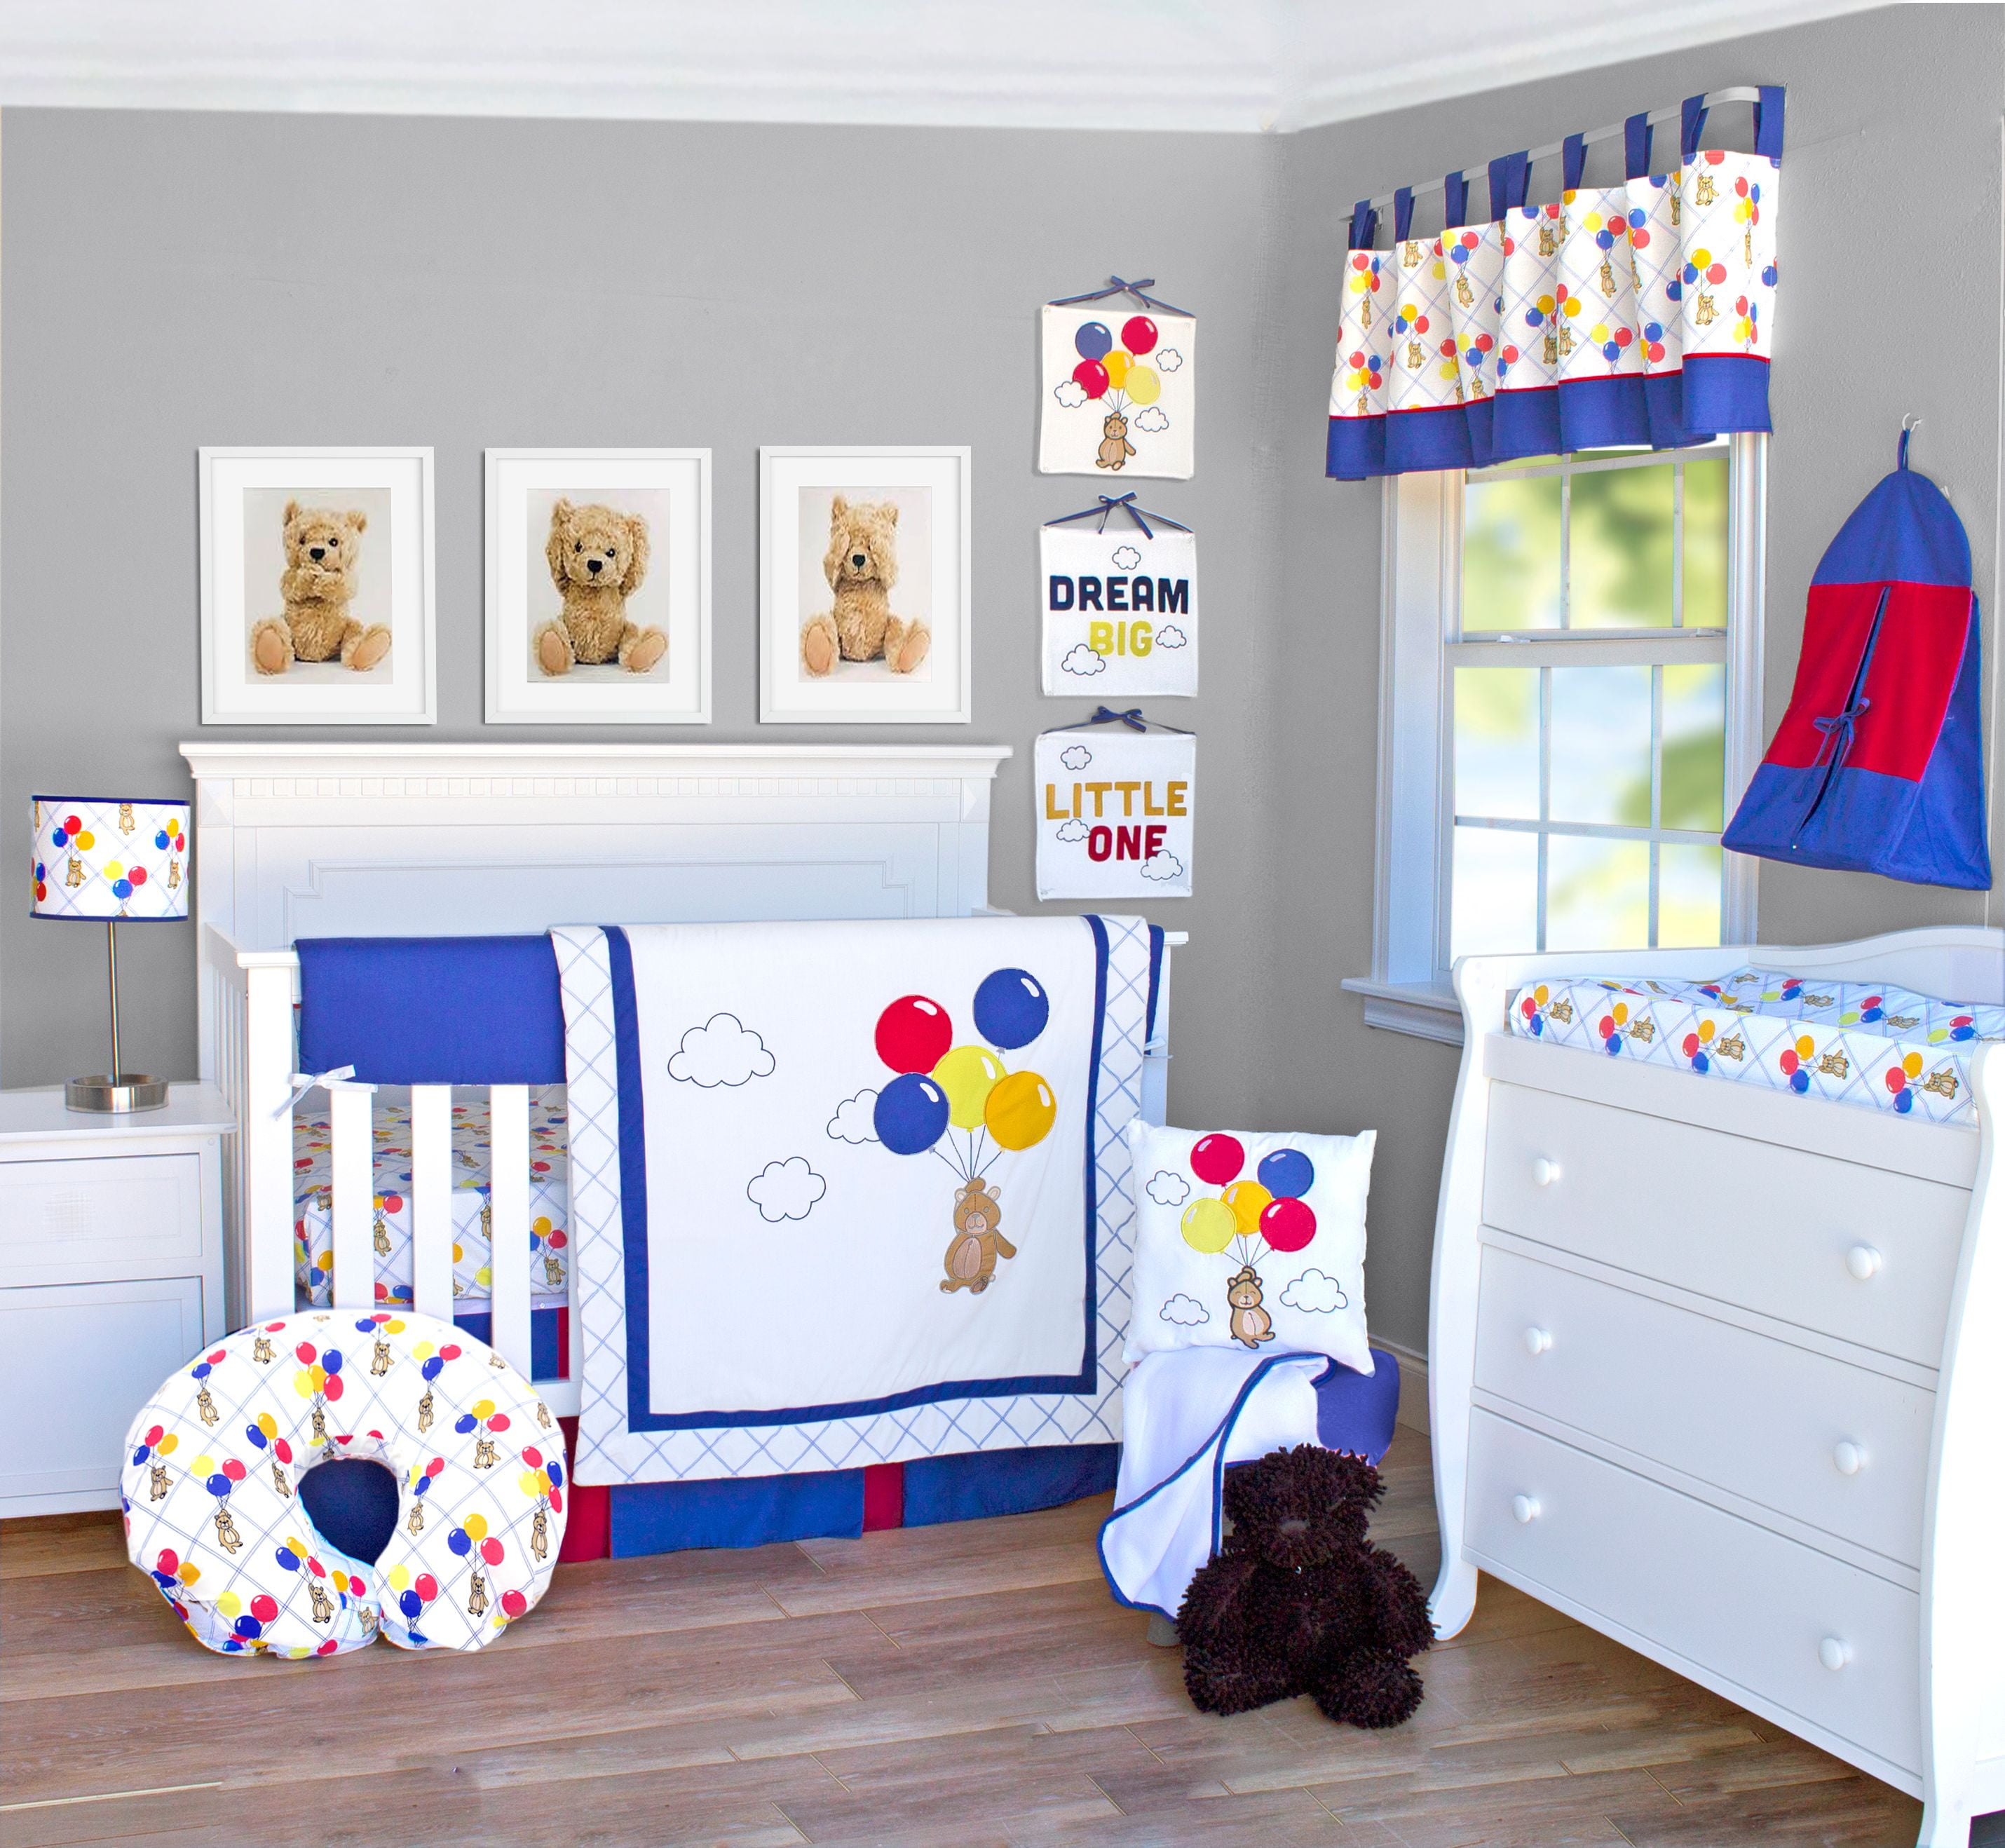 Disney Baby Mickey Mouse Pluto 5 Piece Crib Bedding Set